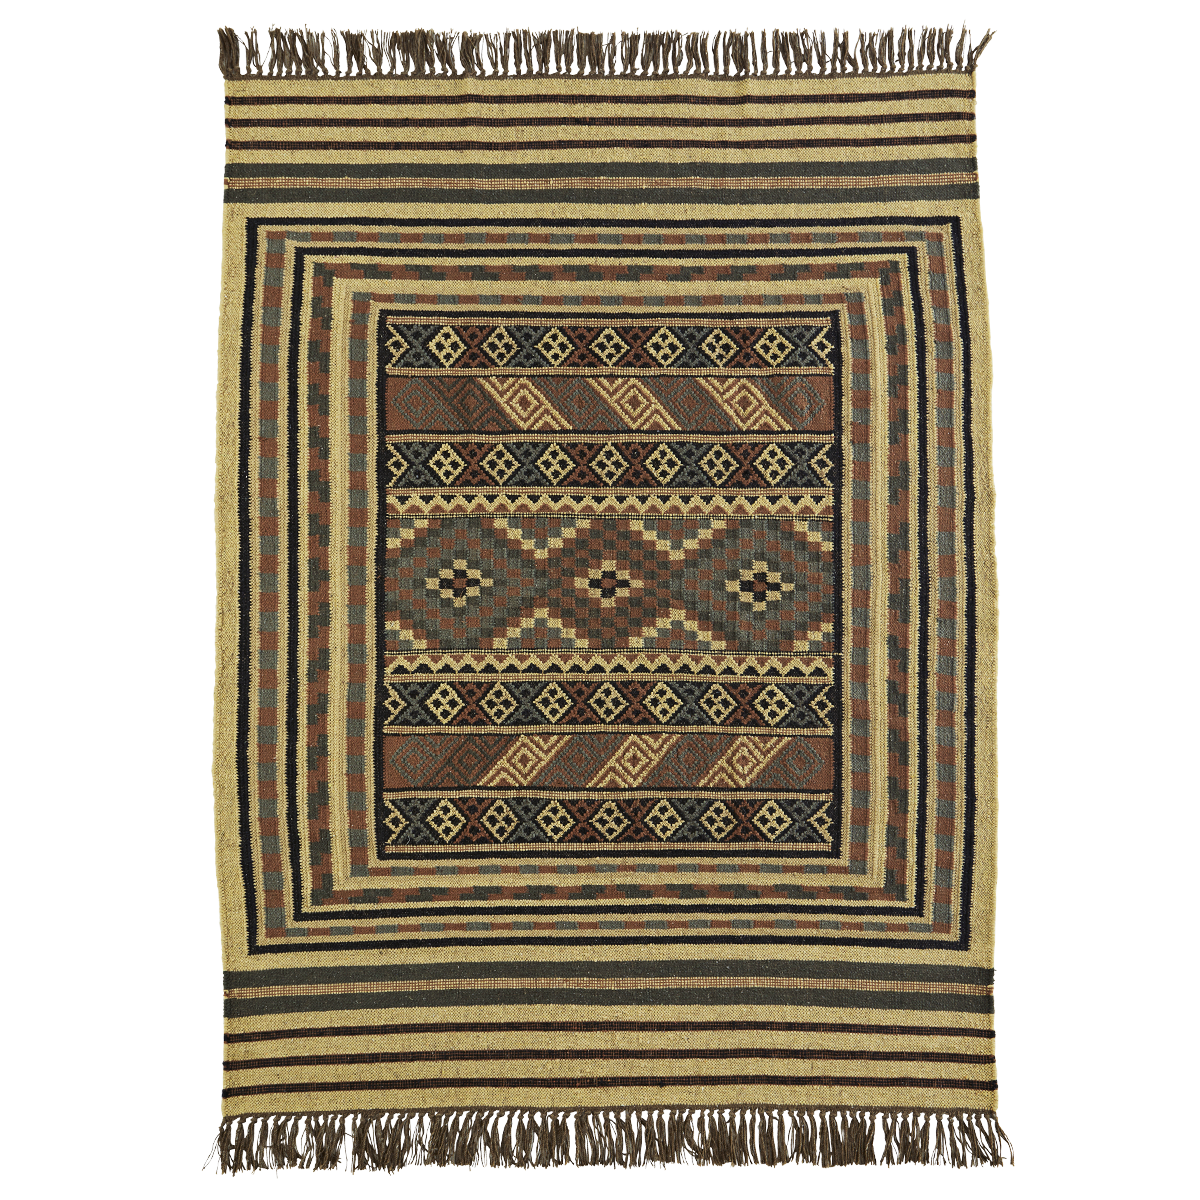 Woven cotton kelim rug